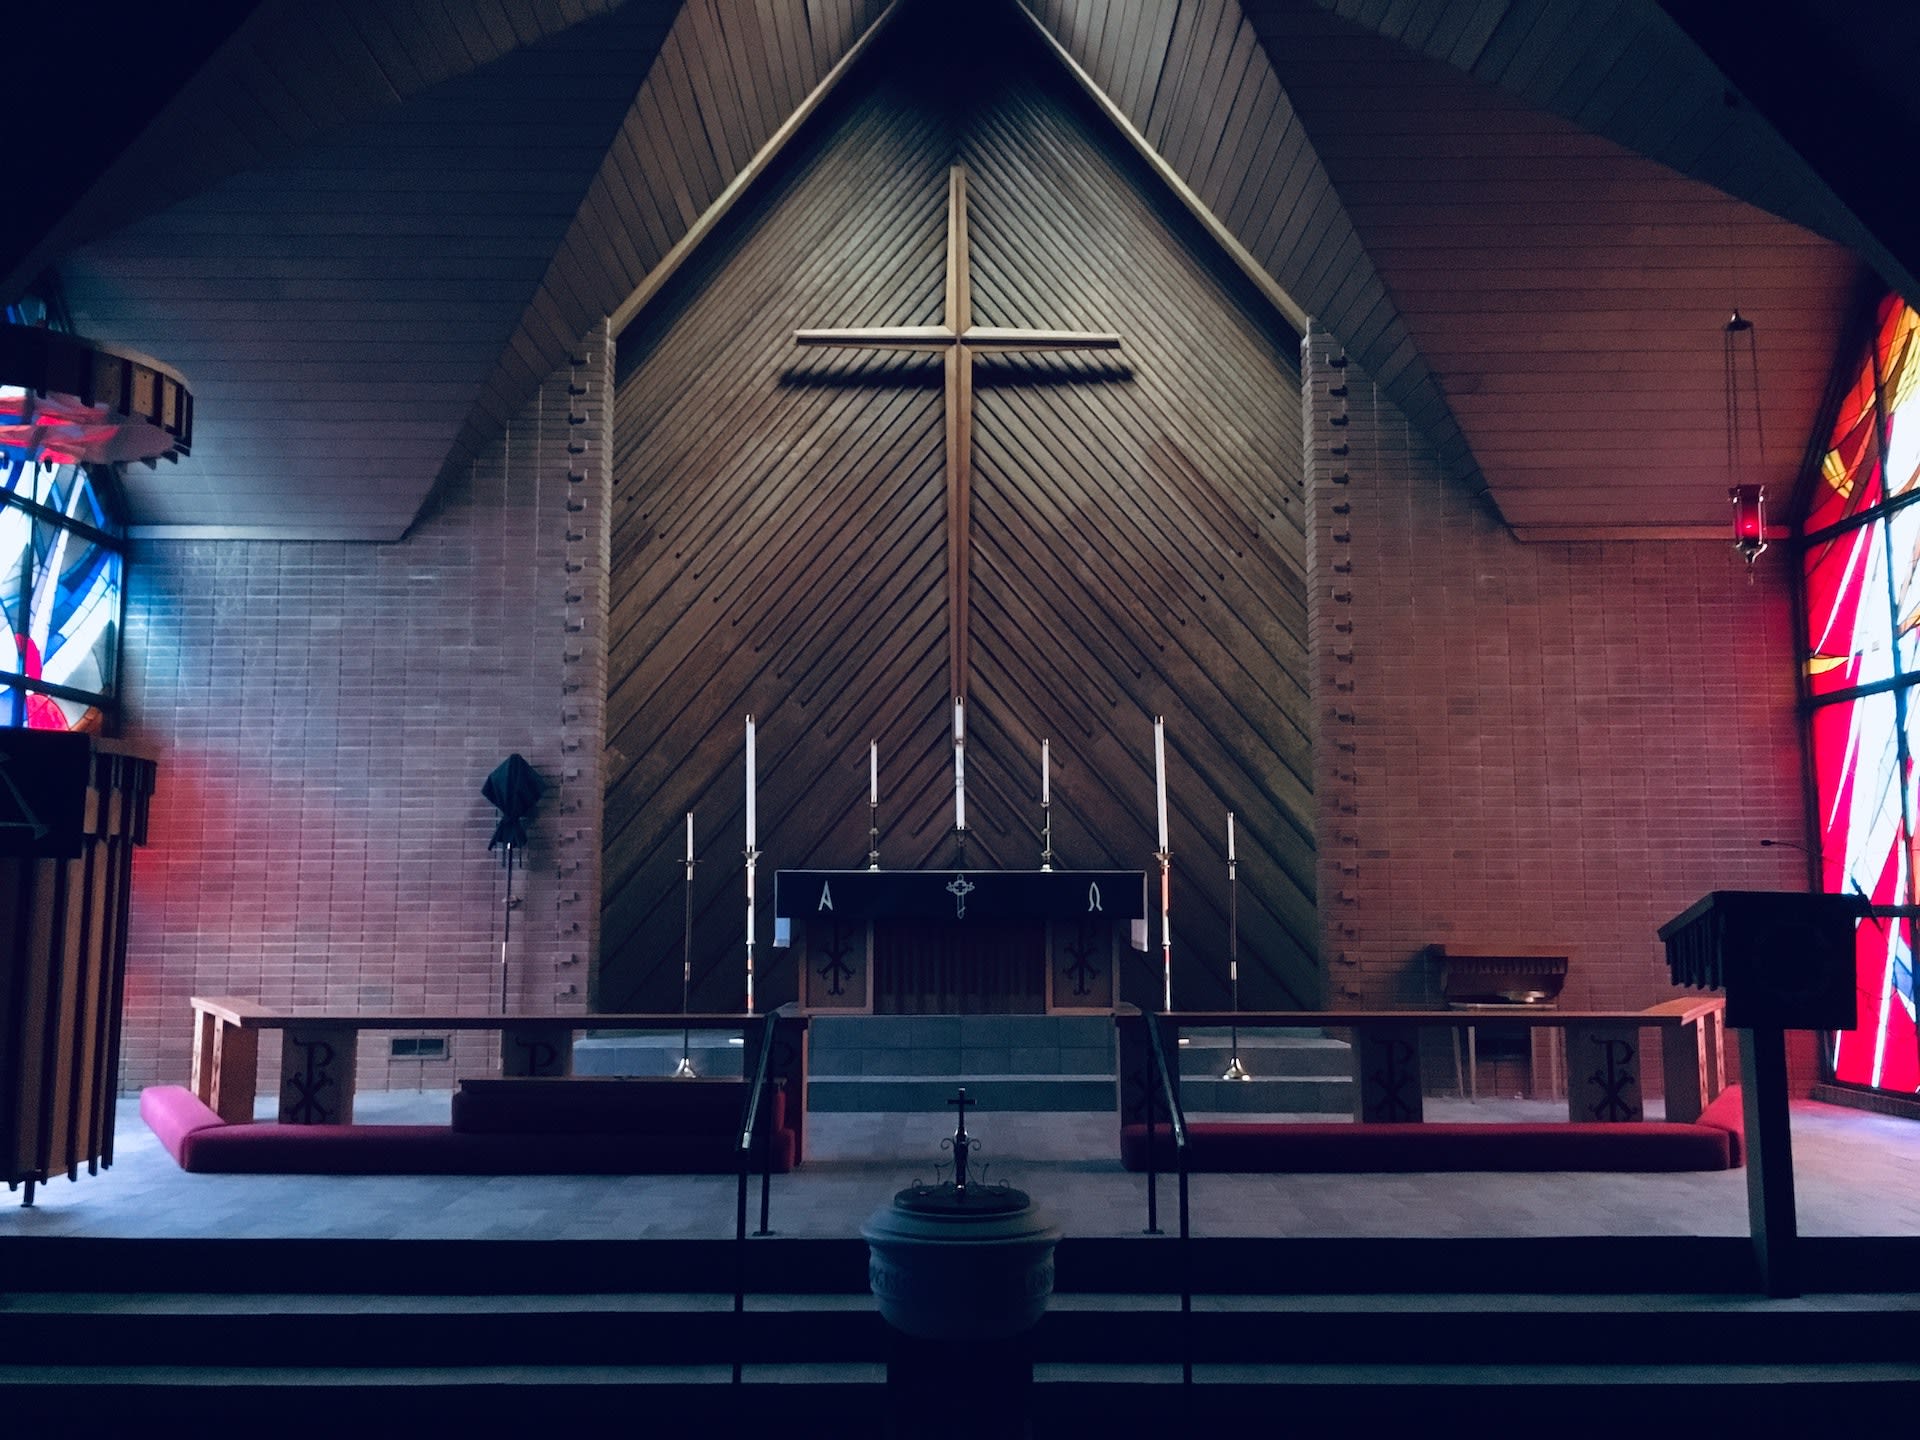 An empty church sanctuary.